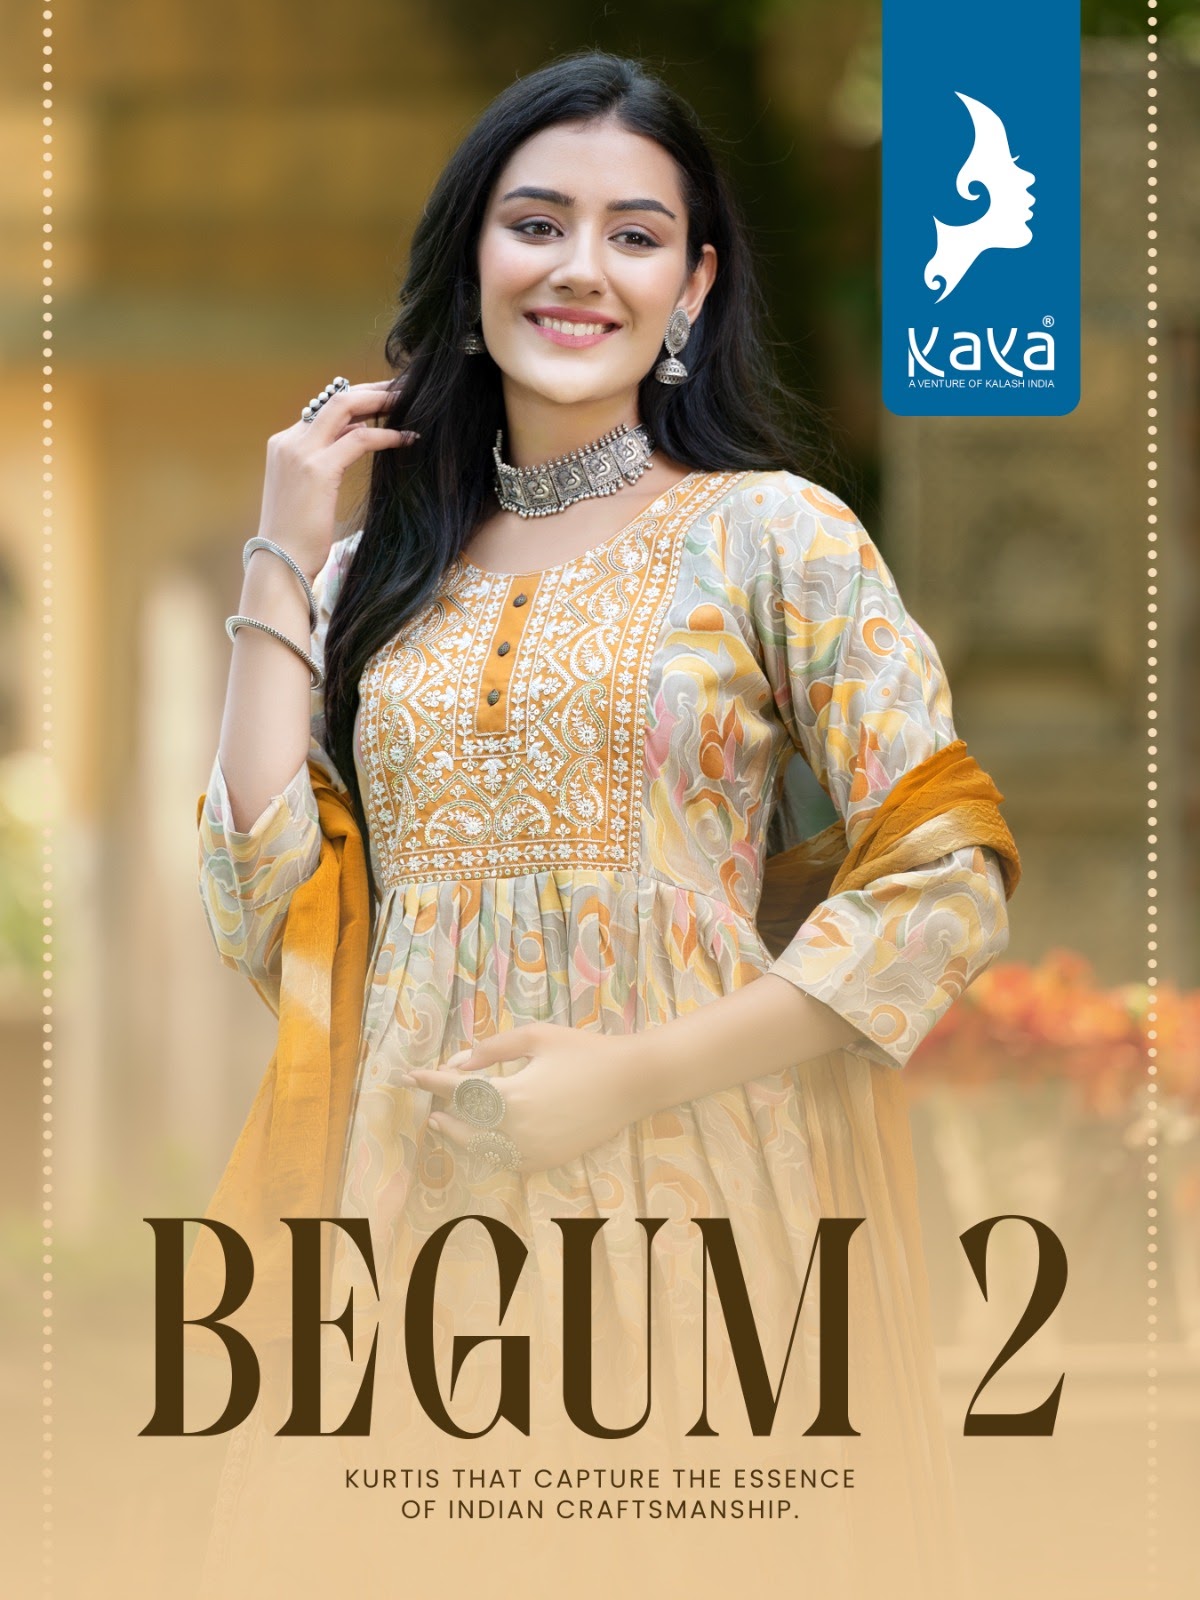 Begum 2 Kaya Modal Readymade Pant Style Suits